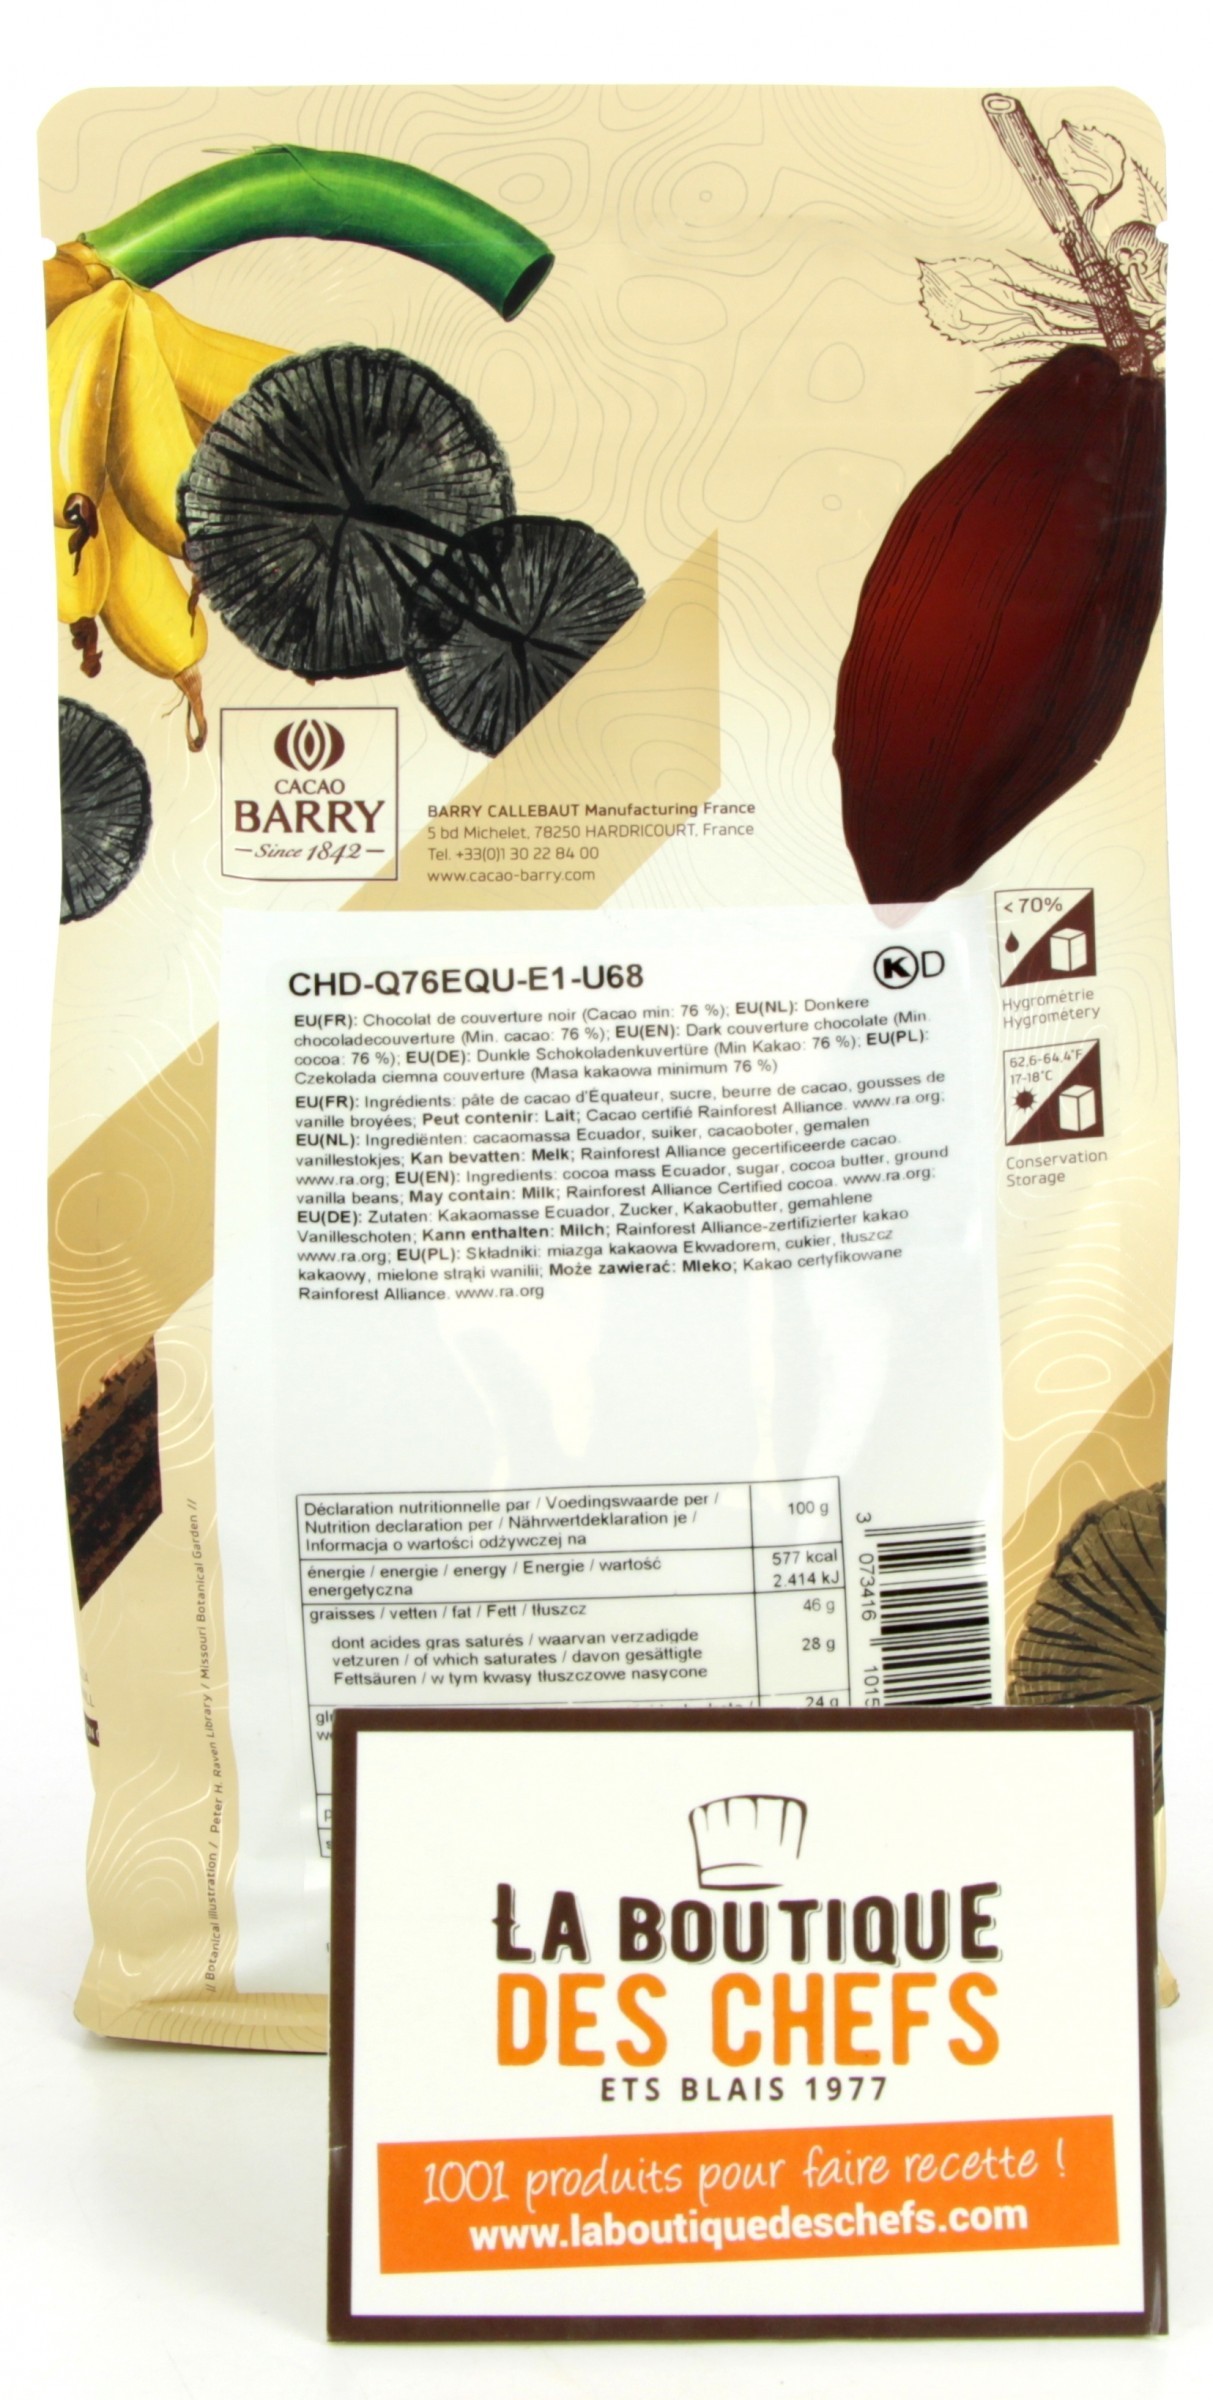 Beurre de cacao en pistoles 1 kg - Chocolat Barry